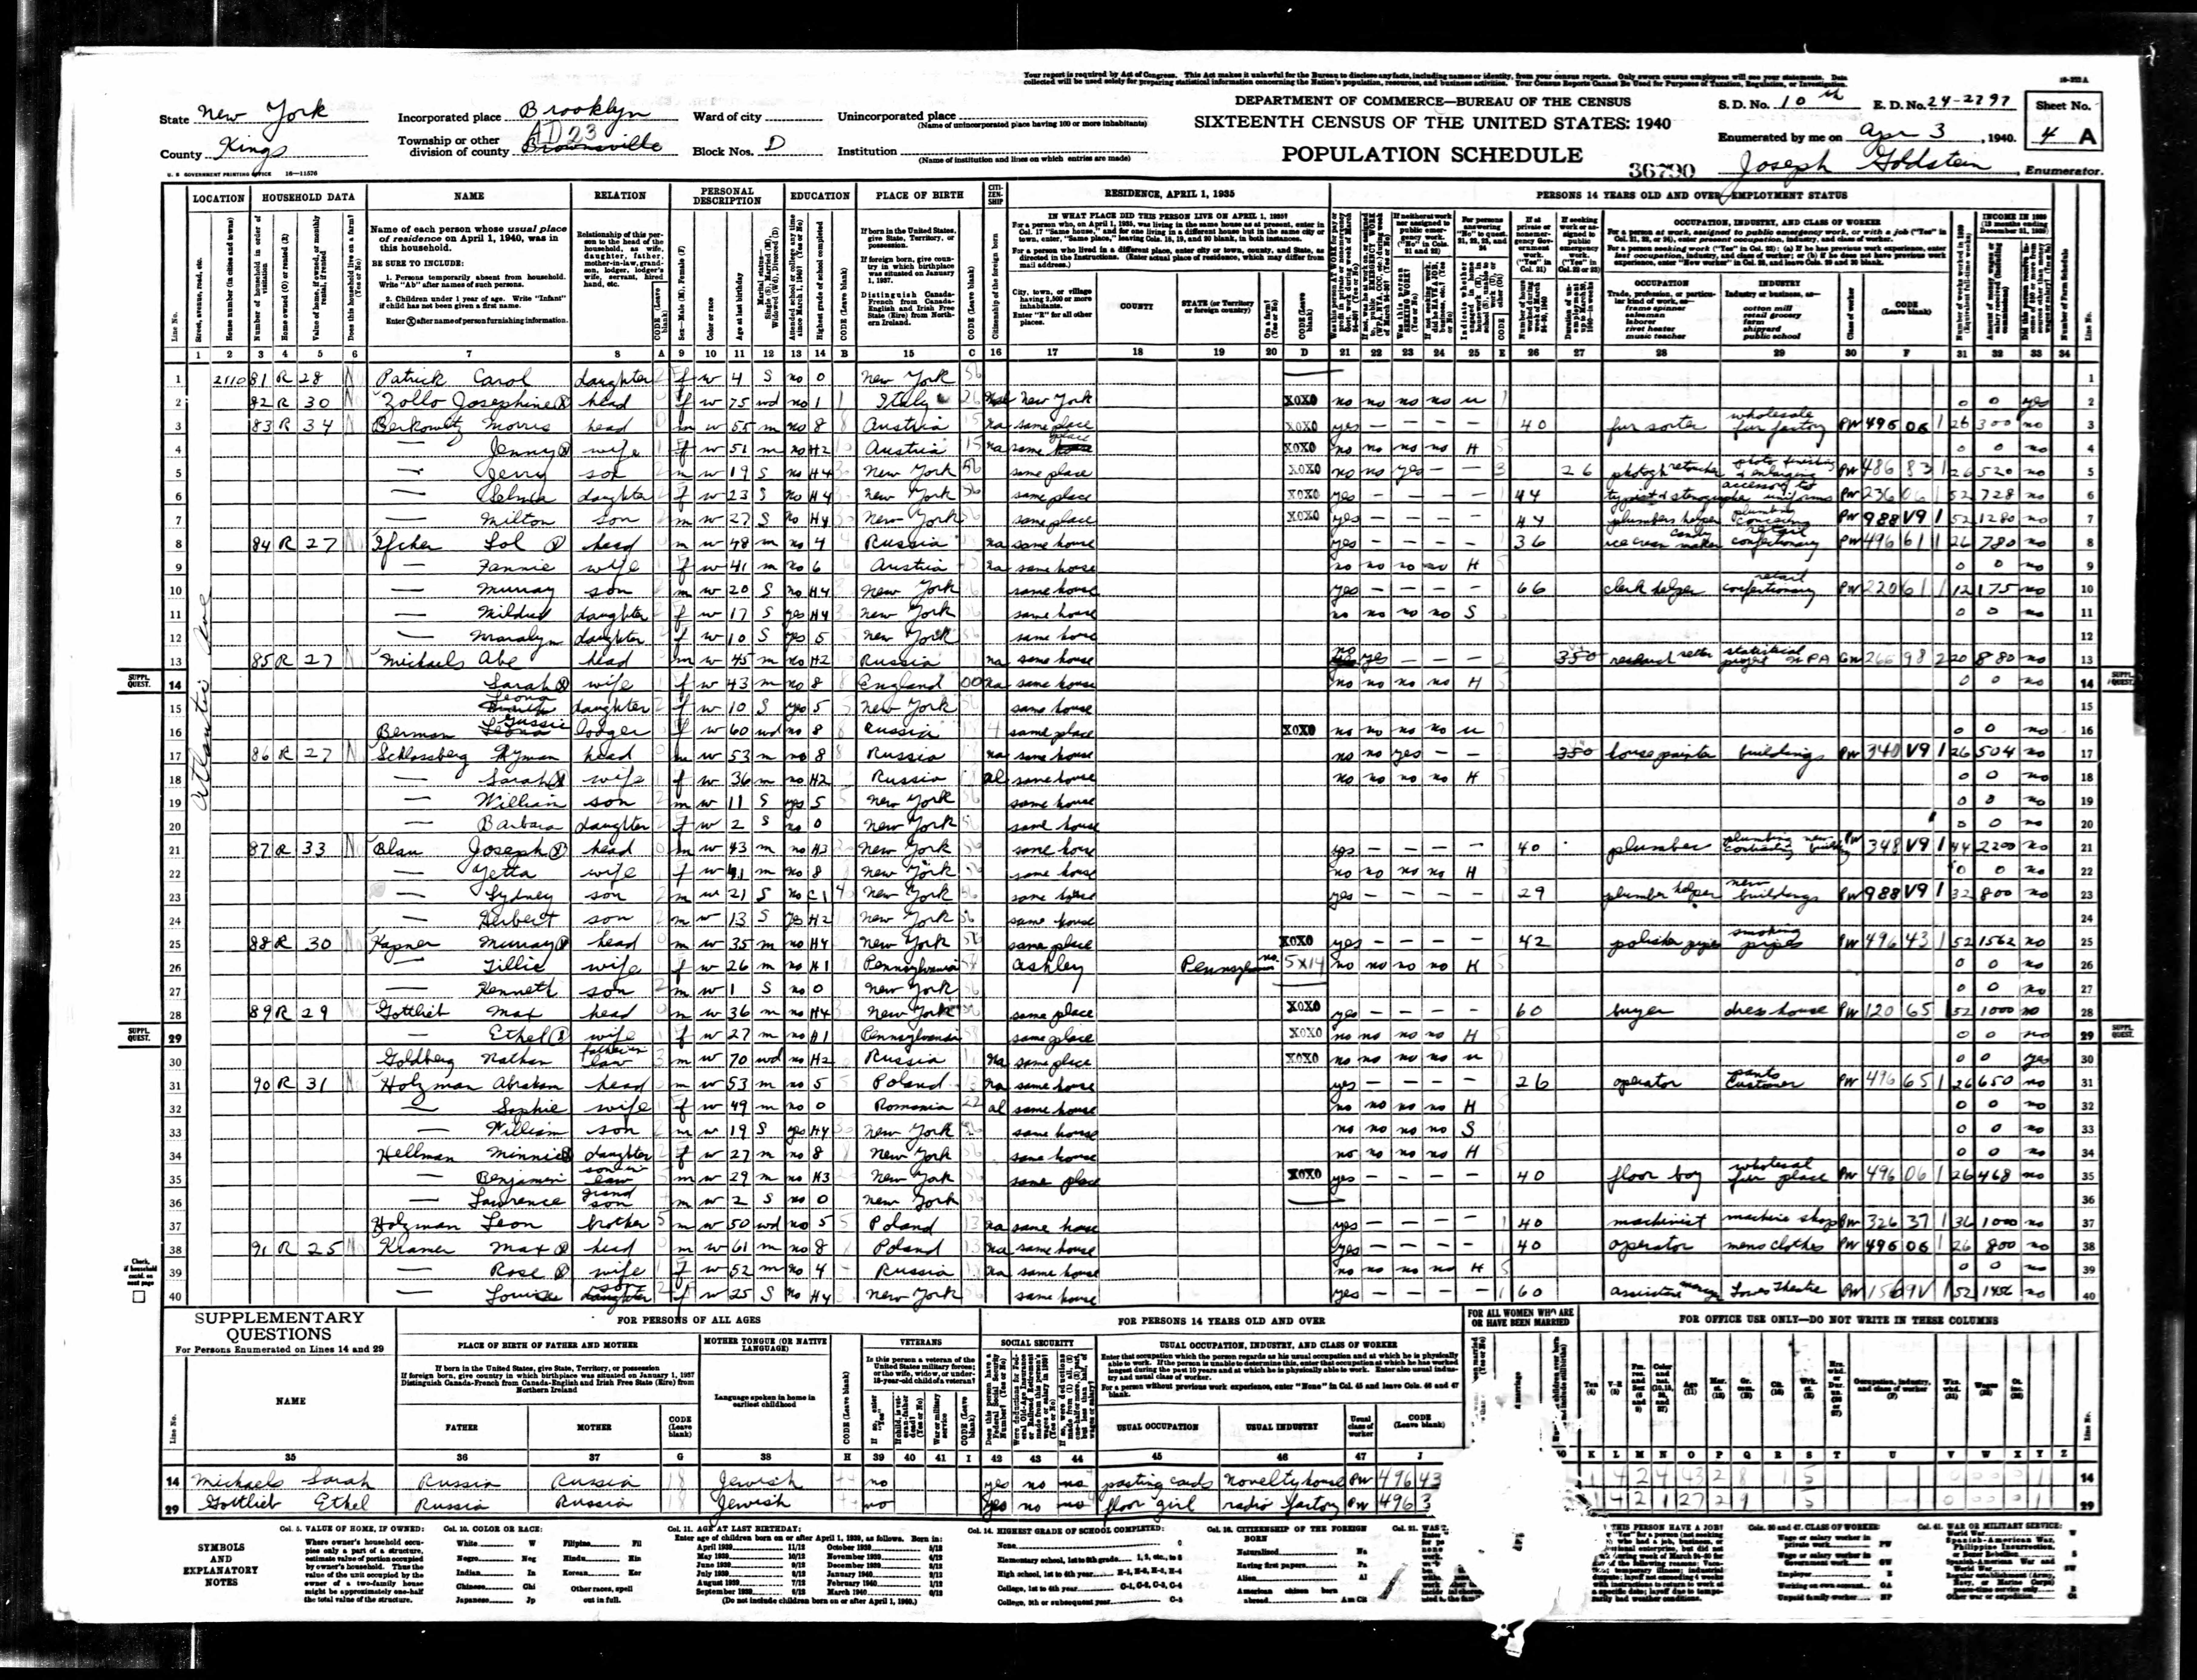 Leon Holzman correct one 1940 census